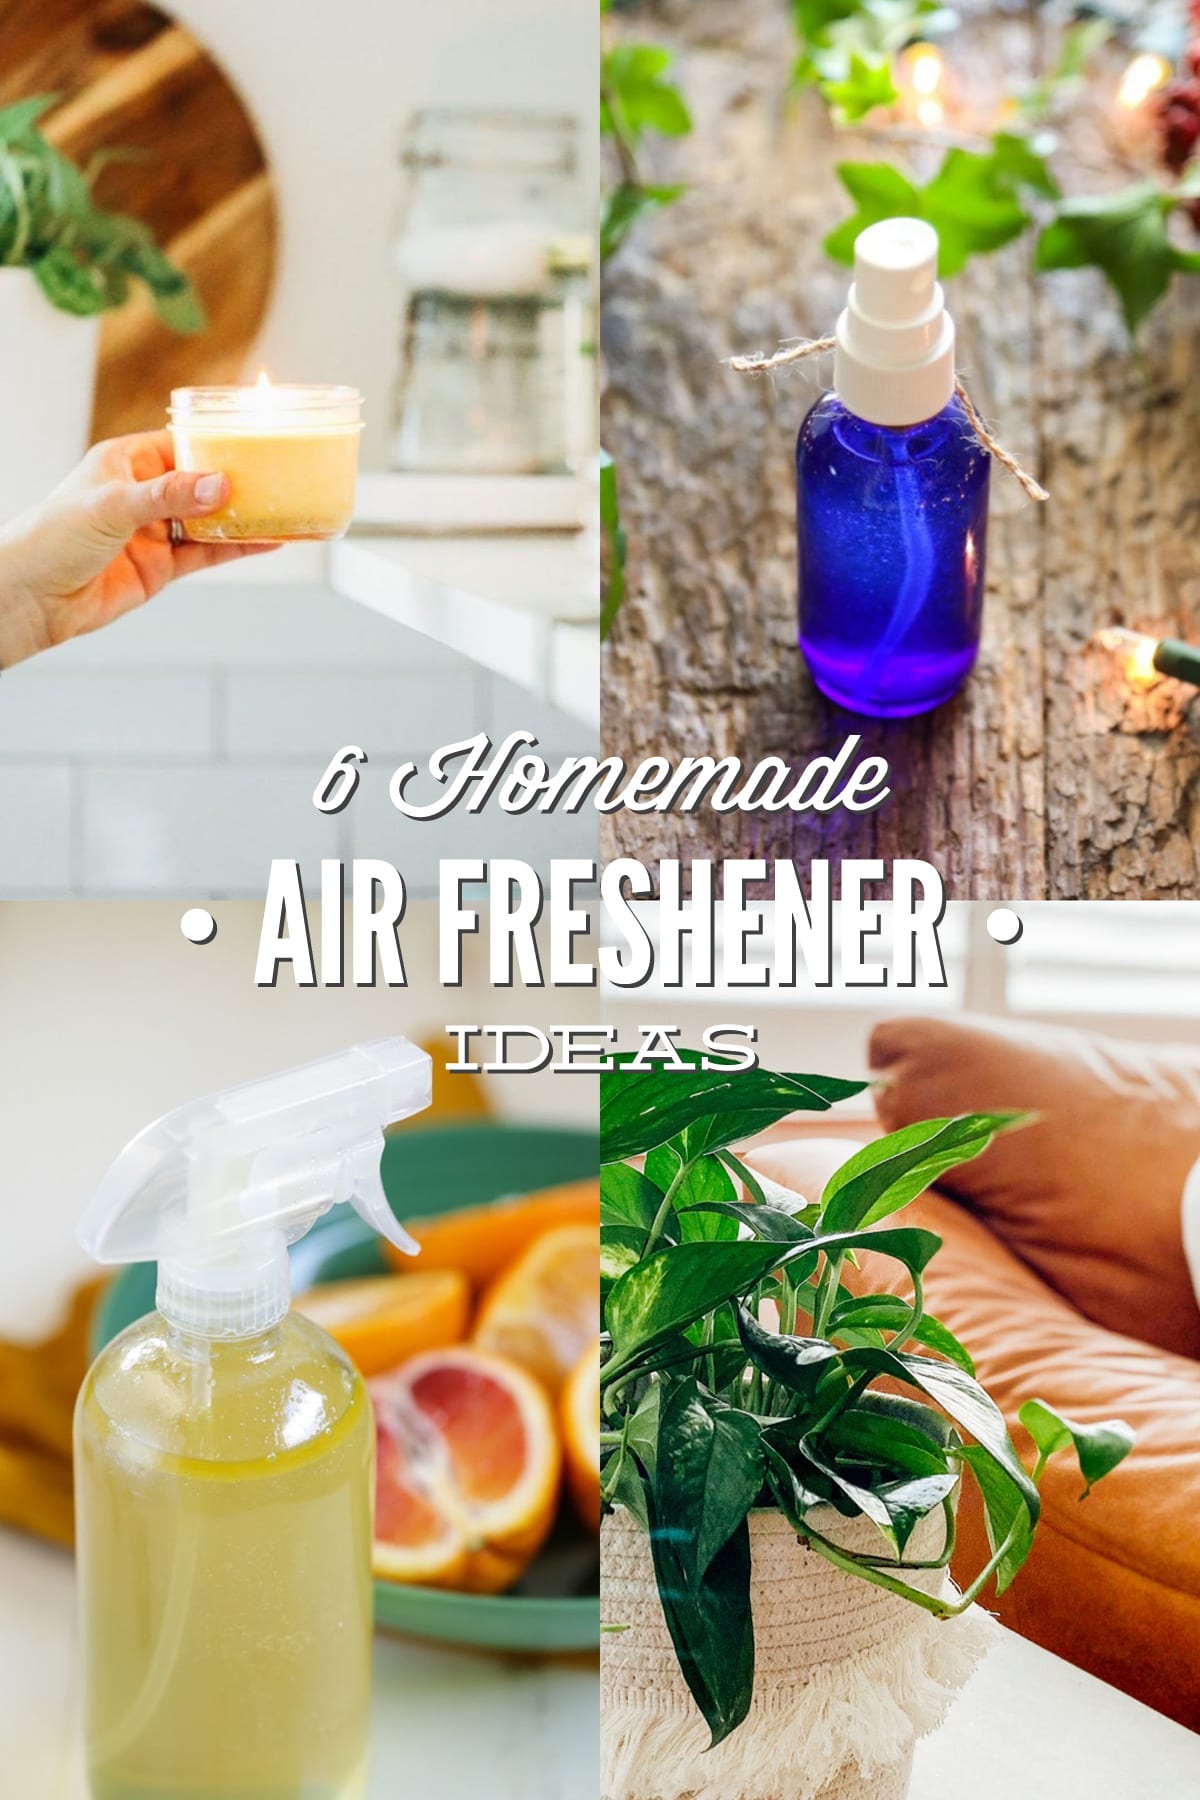 6 DIY Natural Air Fresheners For a Fresh Home